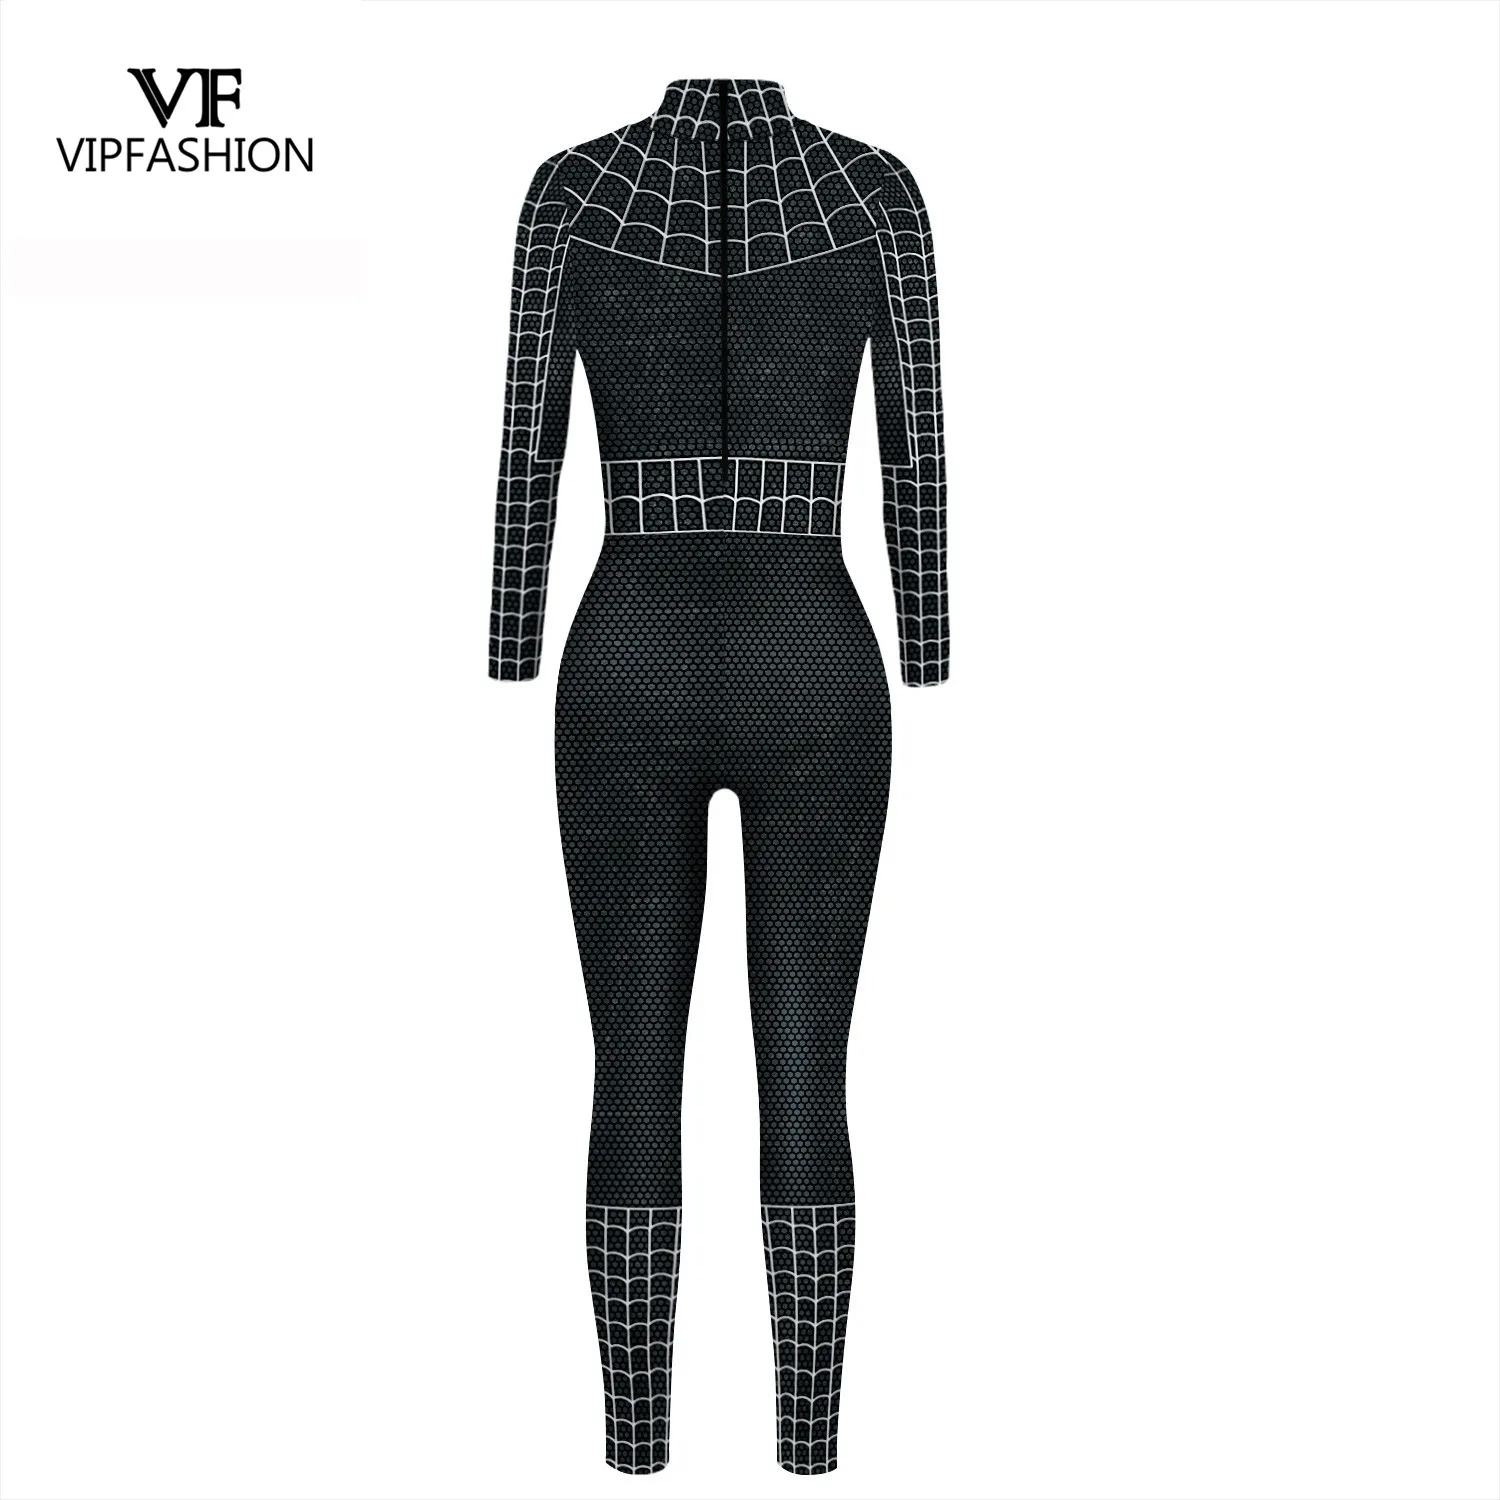 VIP FASHION 2019 New Cosplay 3D Black Spider Printed Super hero Costume Women Movie Cosplay Bodysuit